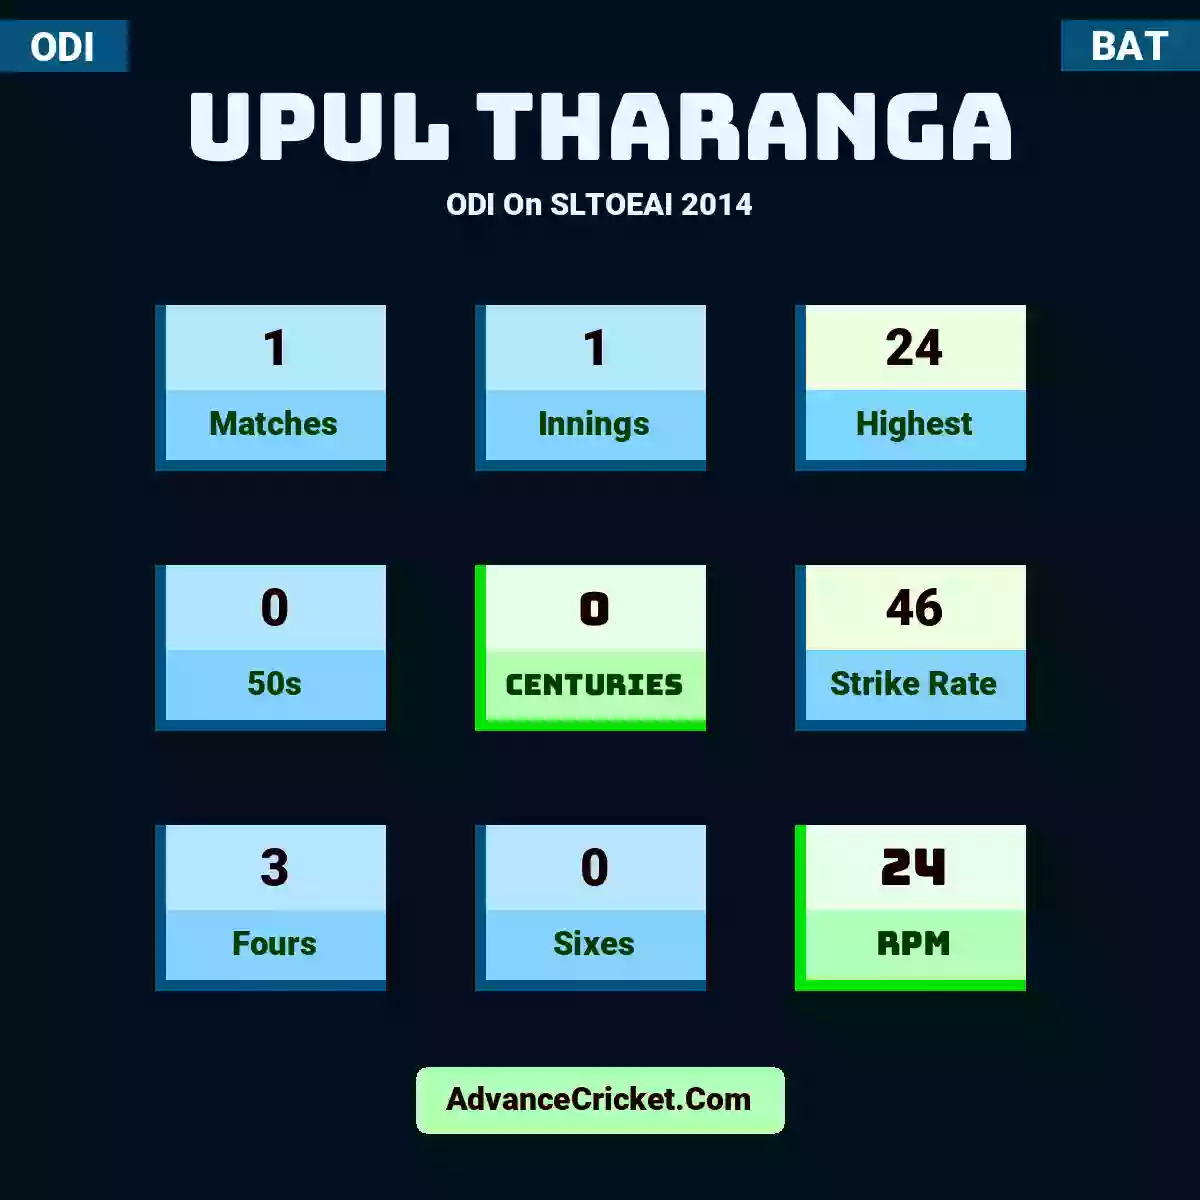 Upul Tharanga ODI  On SLTOEAI 2014, Upul Tharanga played 1 matches, scored 24 runs as highest, 0 half-centuries, and 0 centuries, with a strike rate of 46. U.Tharanga hit 3 fours and 0 sixes, with an RPM of 24.